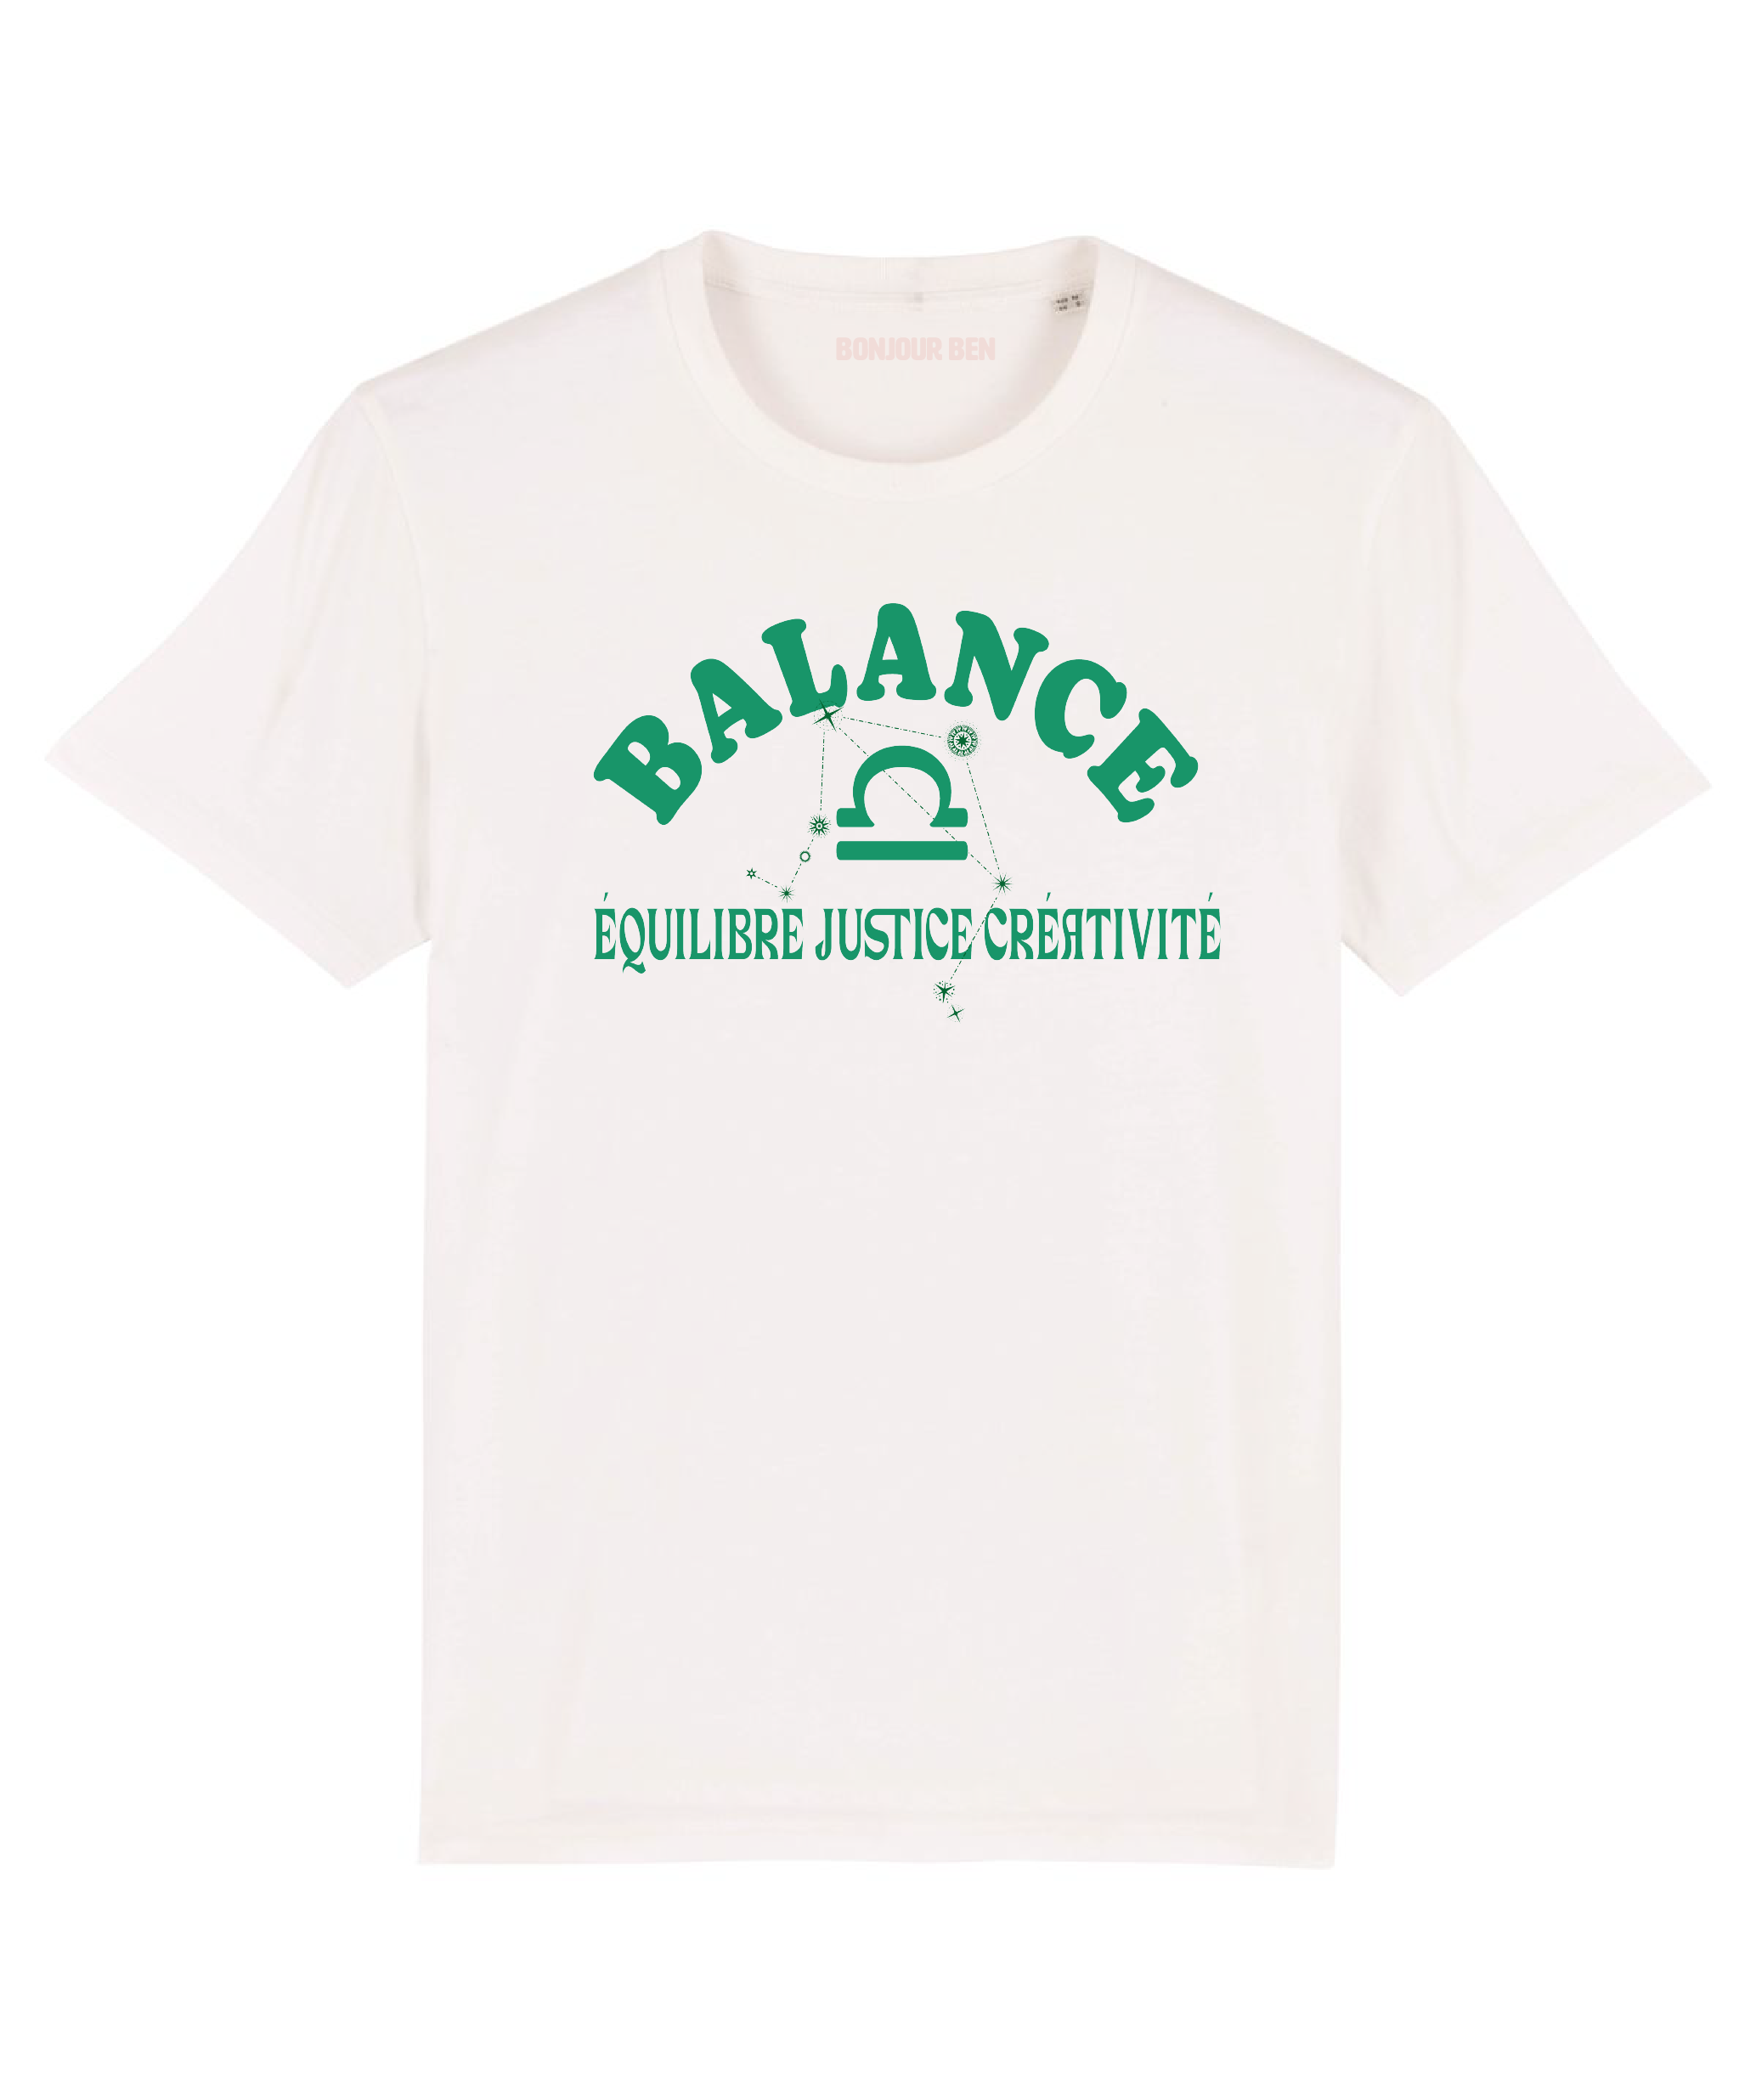 Zodiac signs T-Shirt Balance - White/Green 